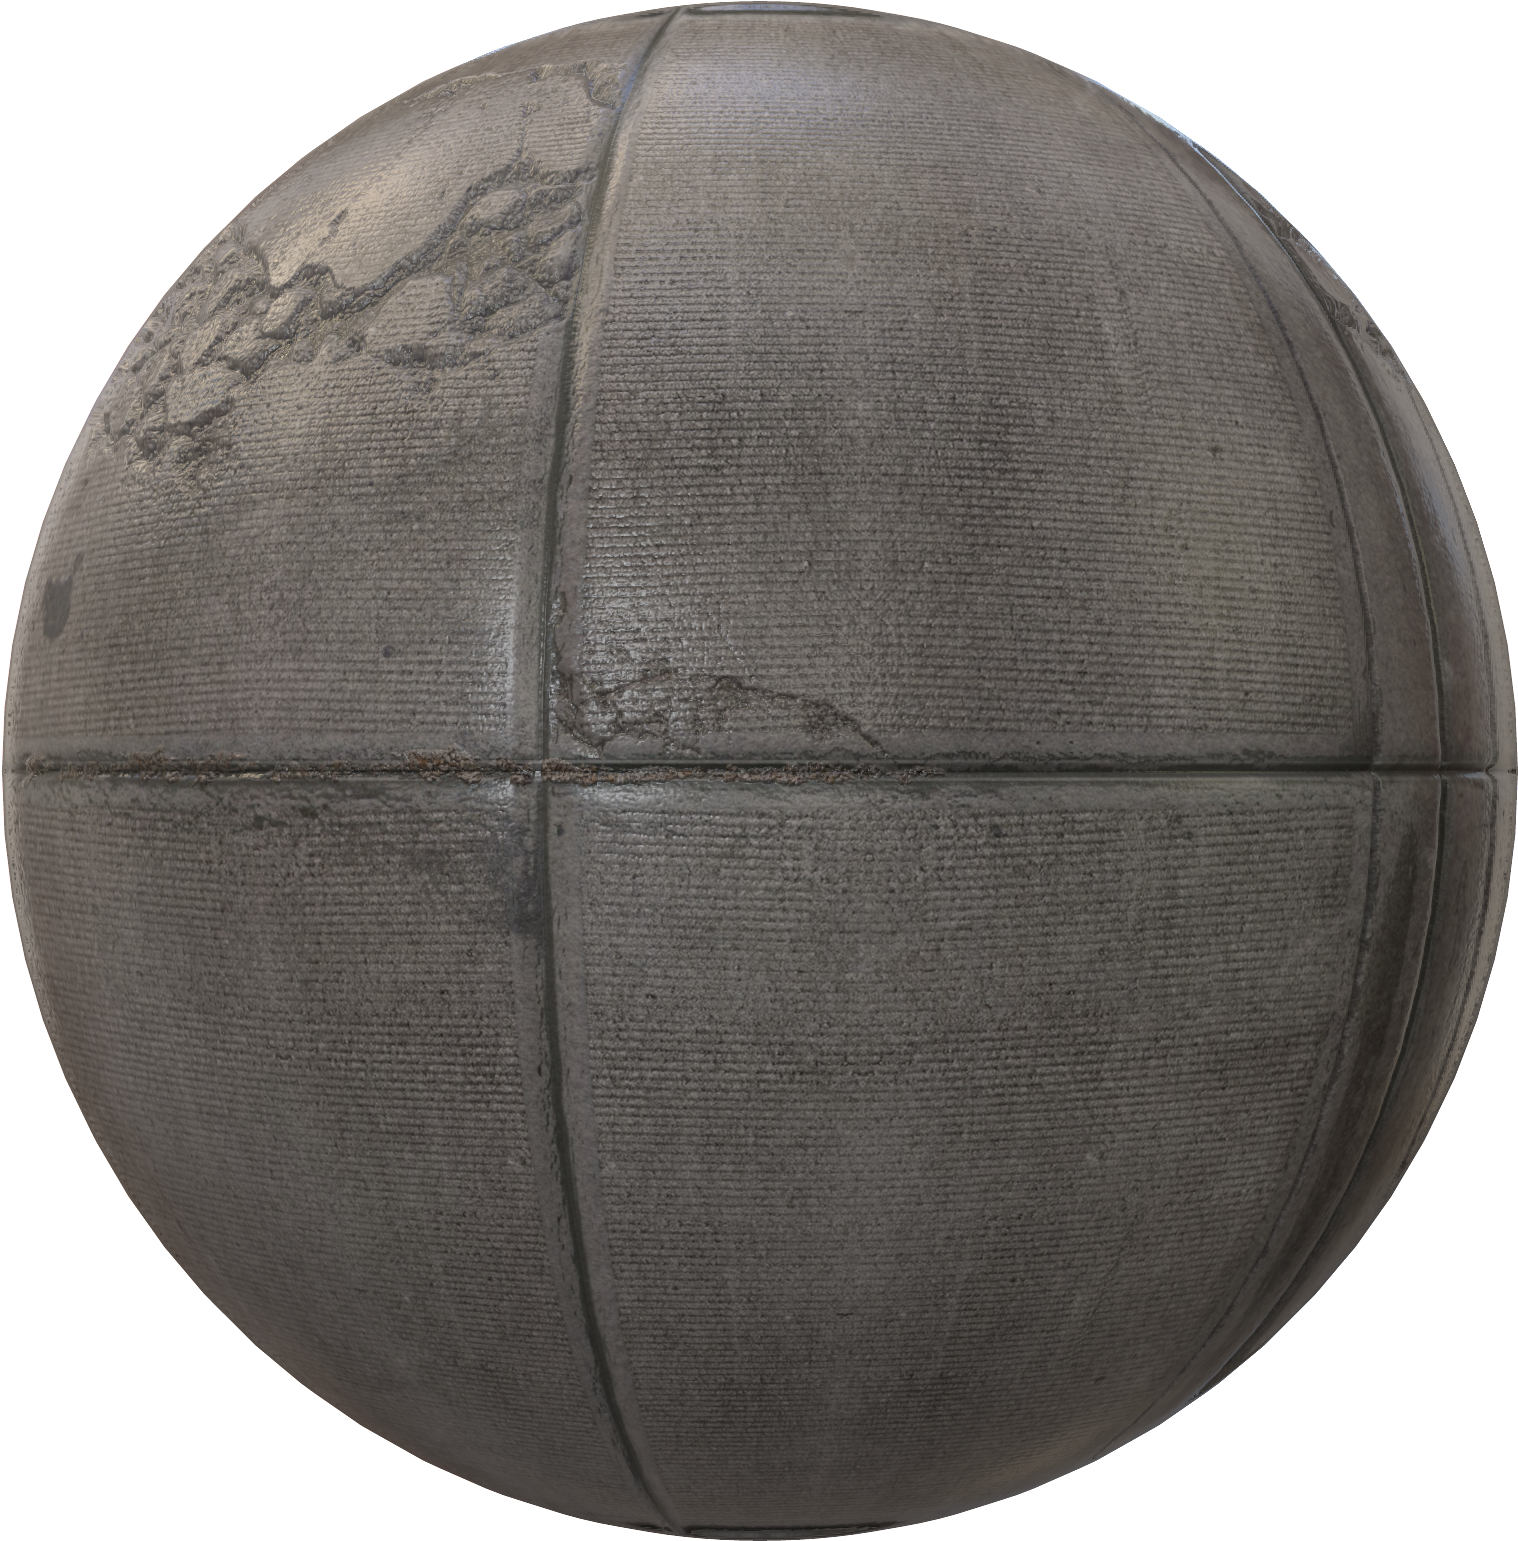 Sidewalk Concrete Sphere - Circle (1920x1920), Png Download